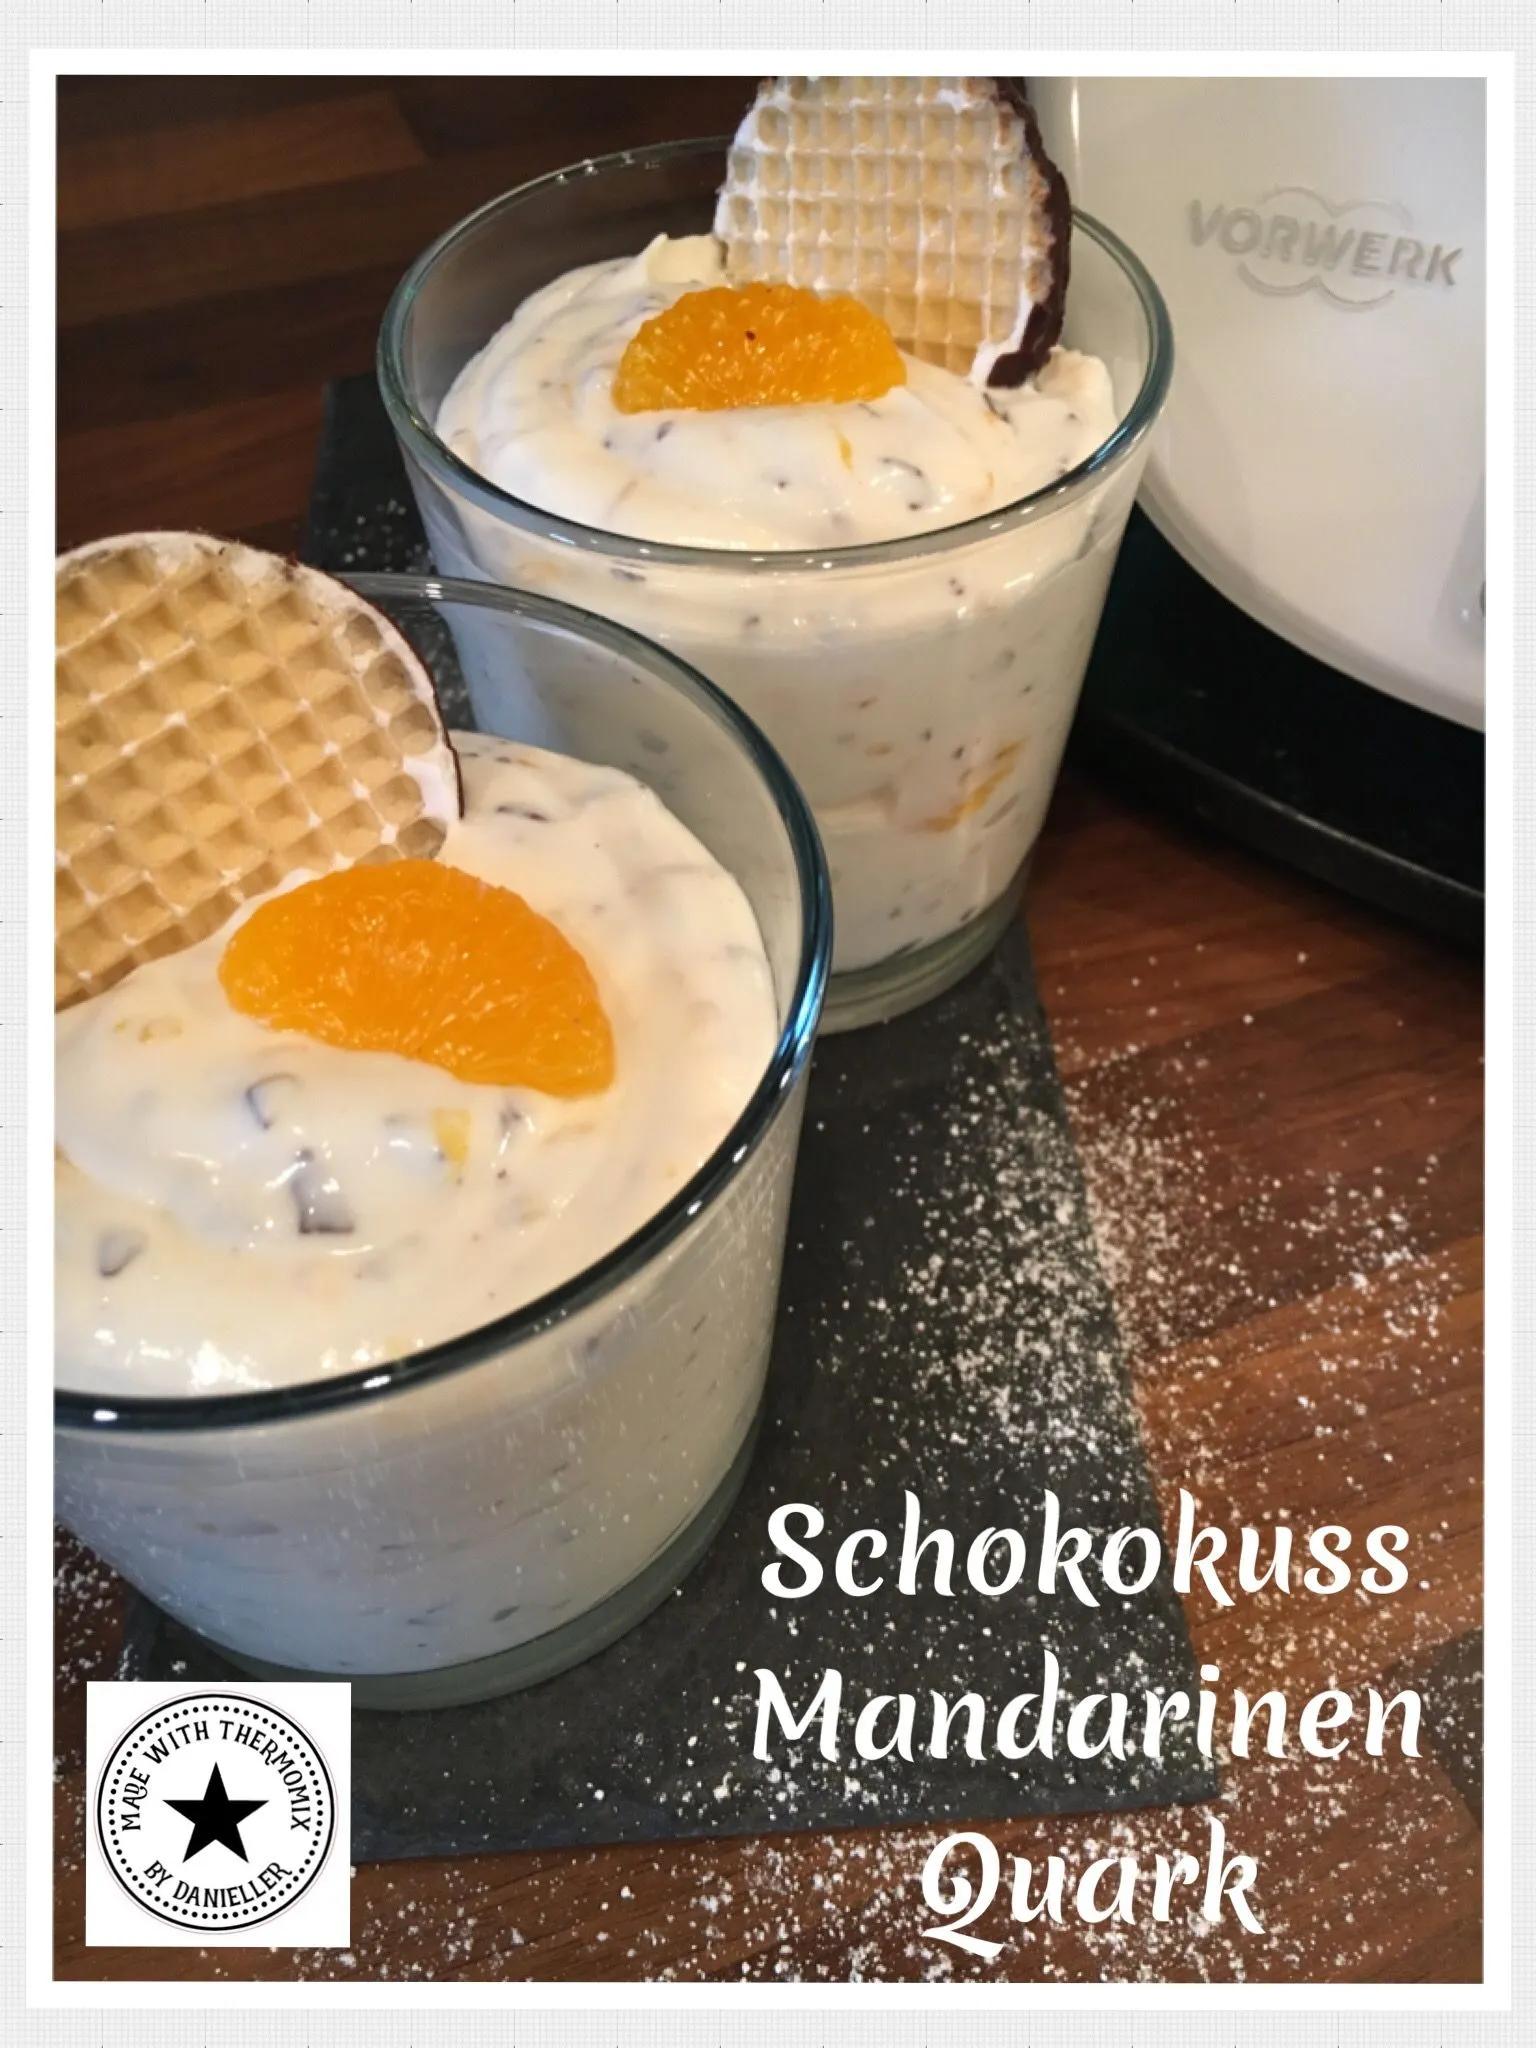 Schokokuss - Mandarinen - Quark von Pastacaro | Chefkoch | Rezeptideen ...